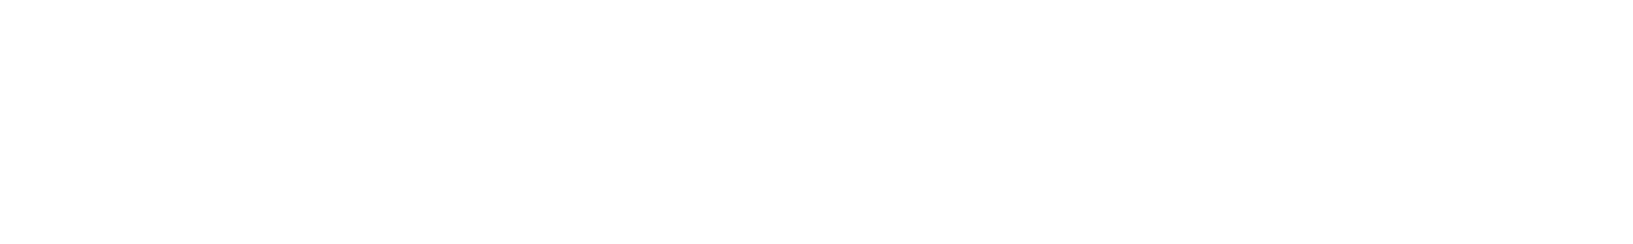 Cambium Networks logo large for dark backgrounds (transparent PNG)